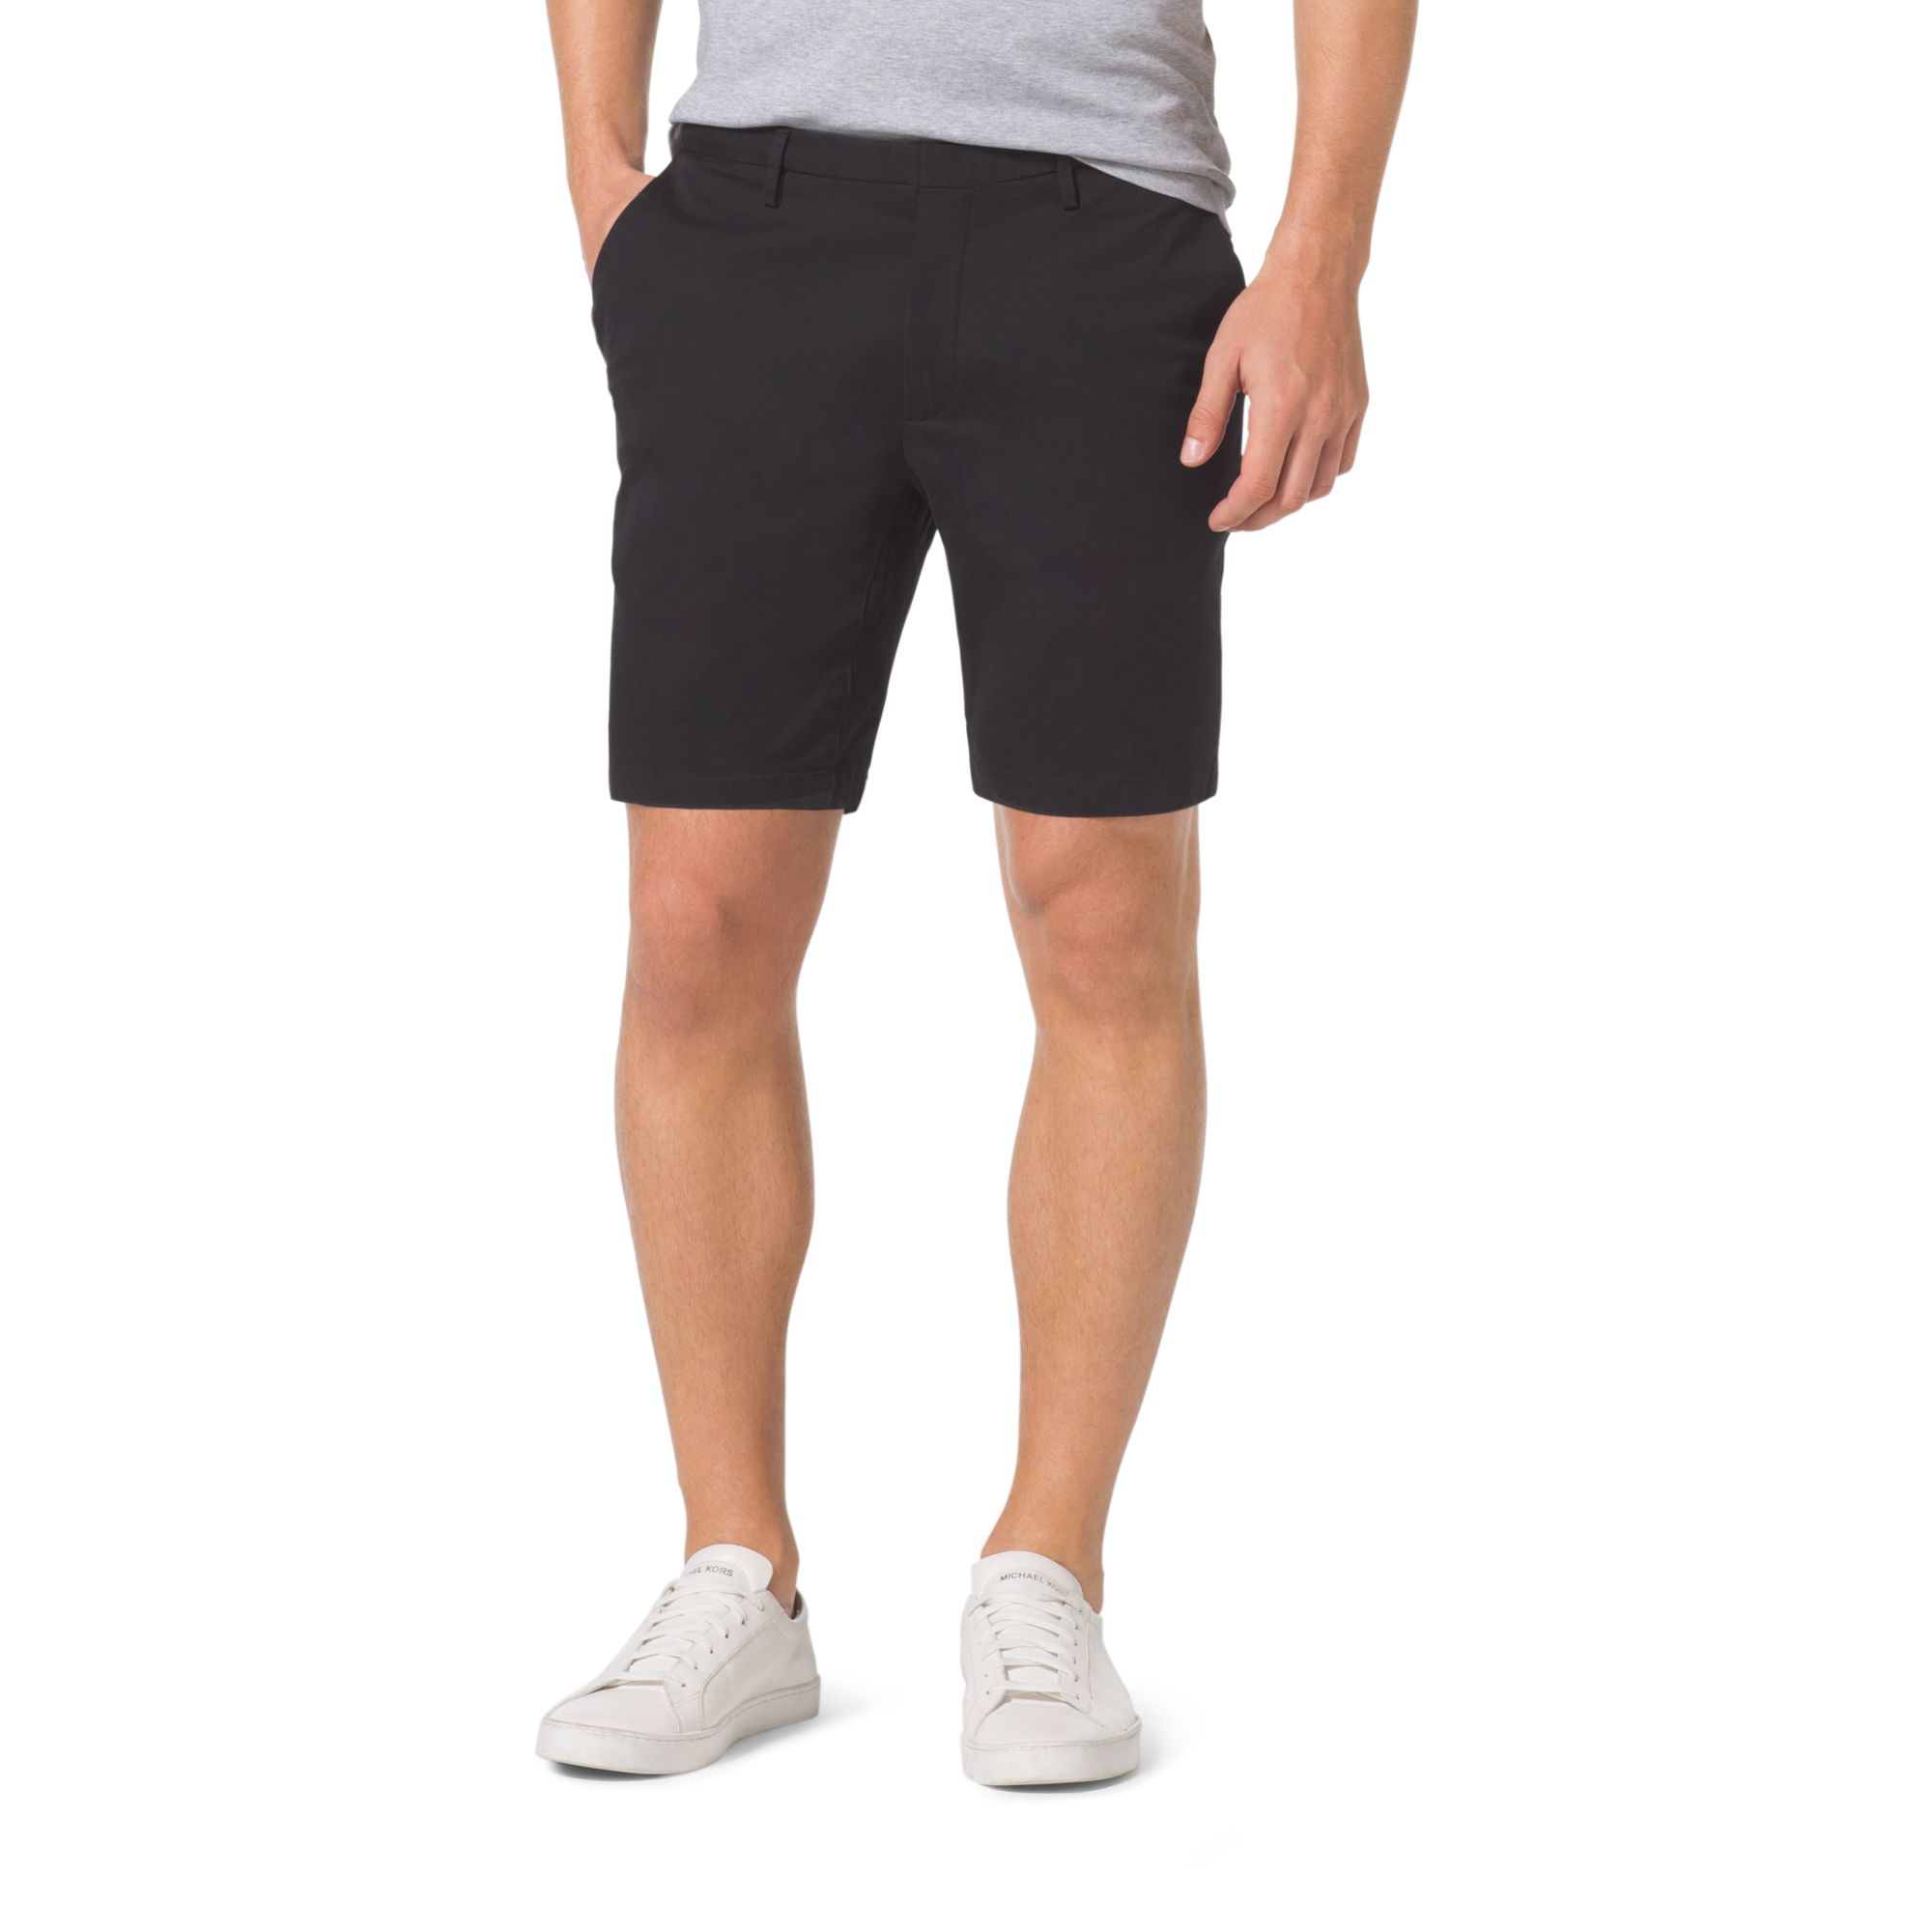 michael kors mens shorts